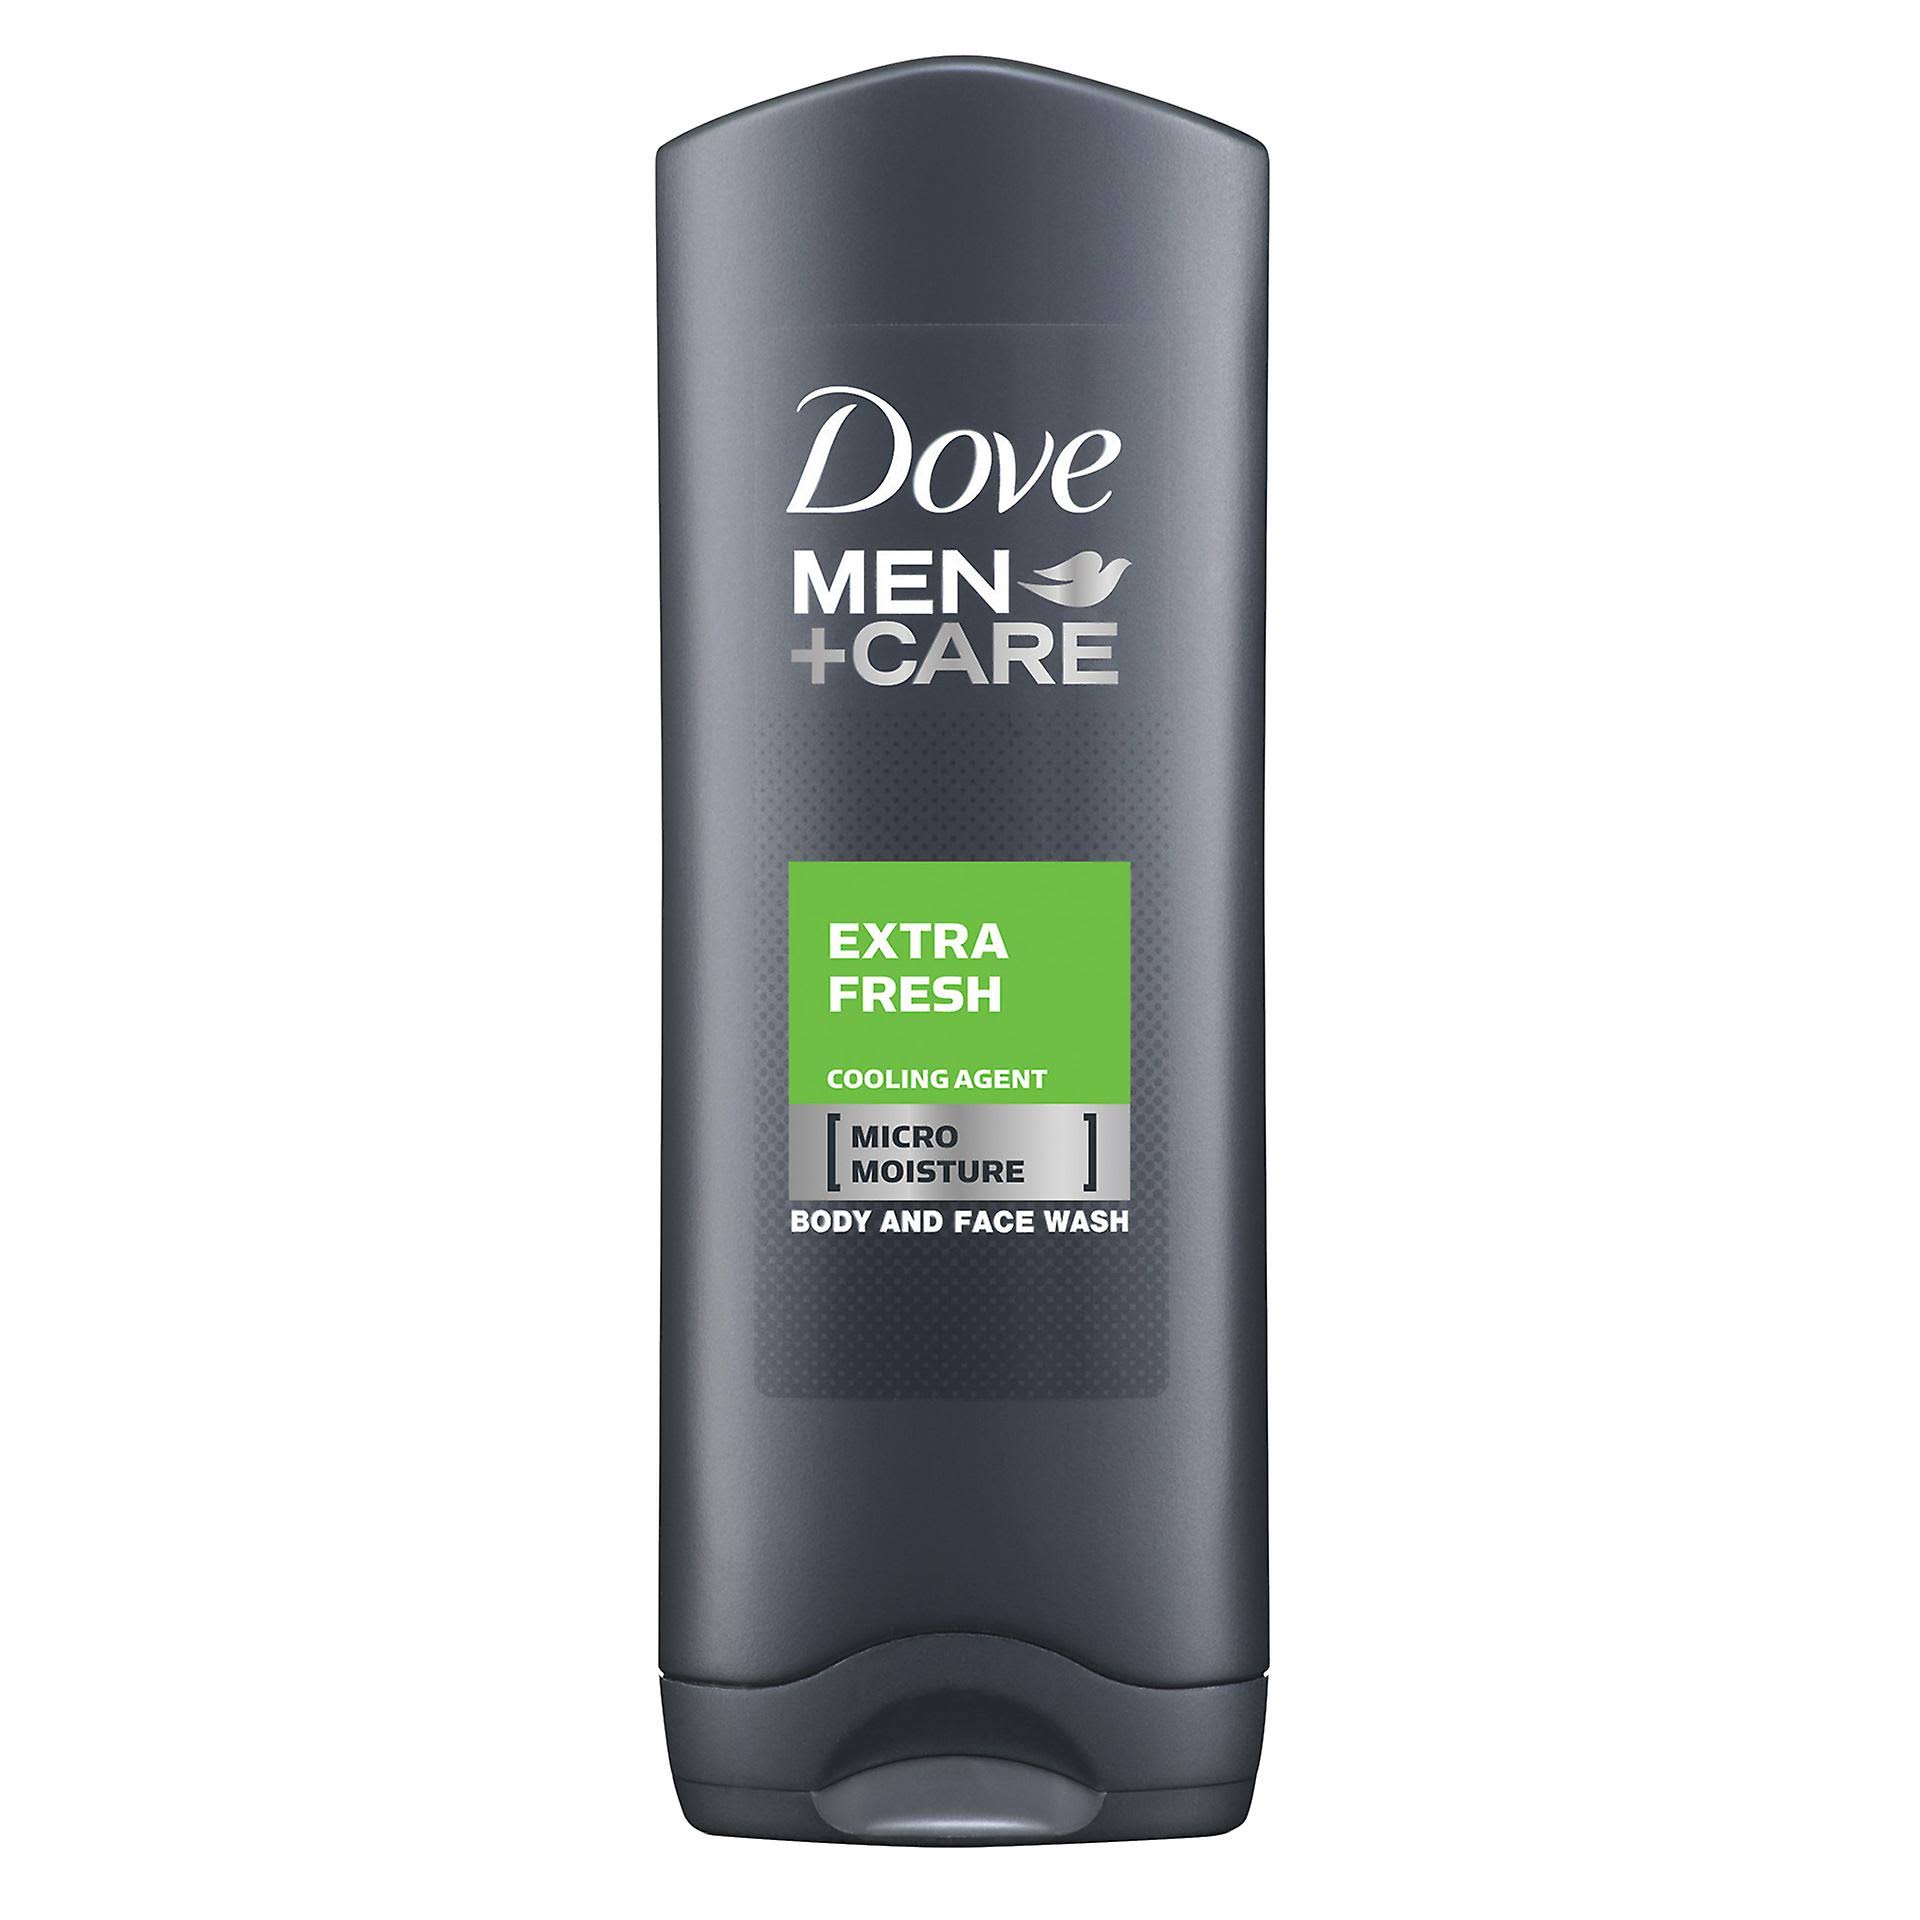 Dove Men+Care Body & Face Wash - Extra Fresh, 250ml